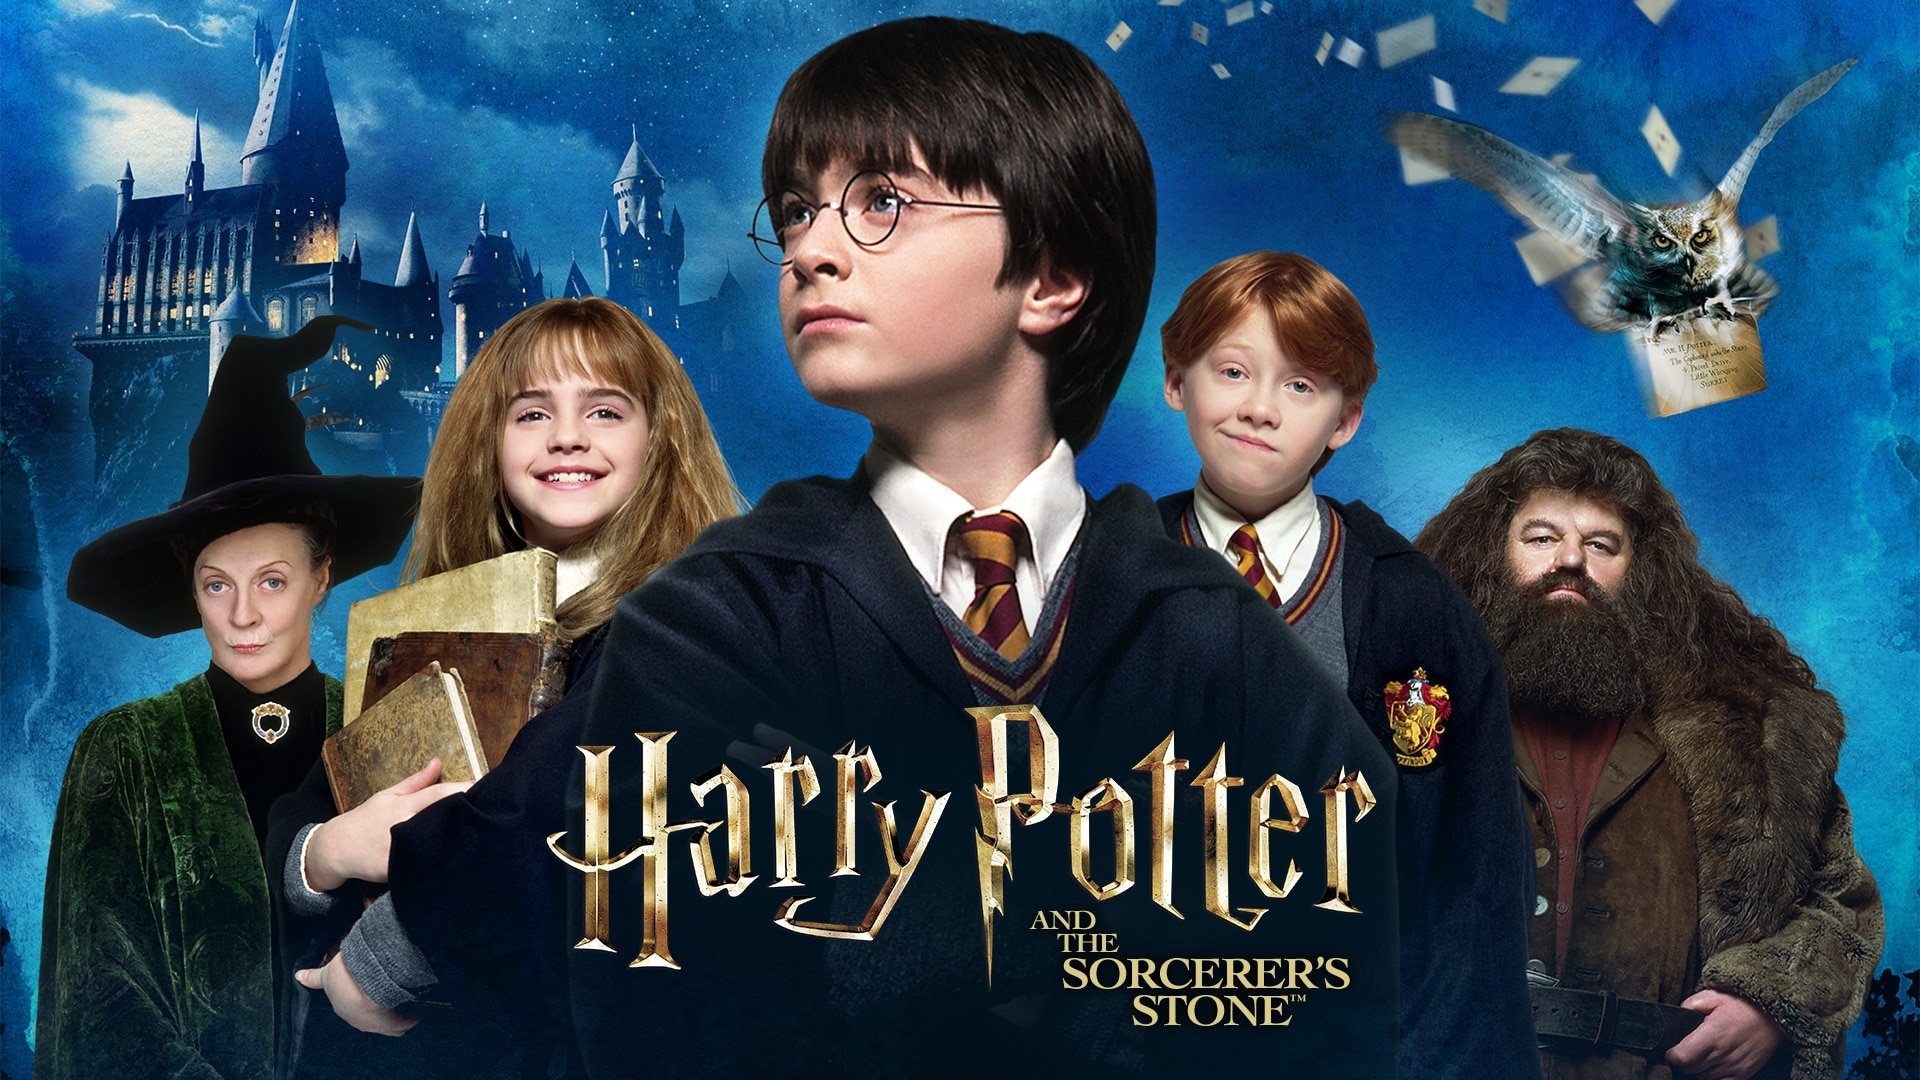 Harry Potter sorcerer's stone, Magical wizarding world, Enchanting movie adventure, Hogwarts marvels, 1920x1080 Full HD Desktop